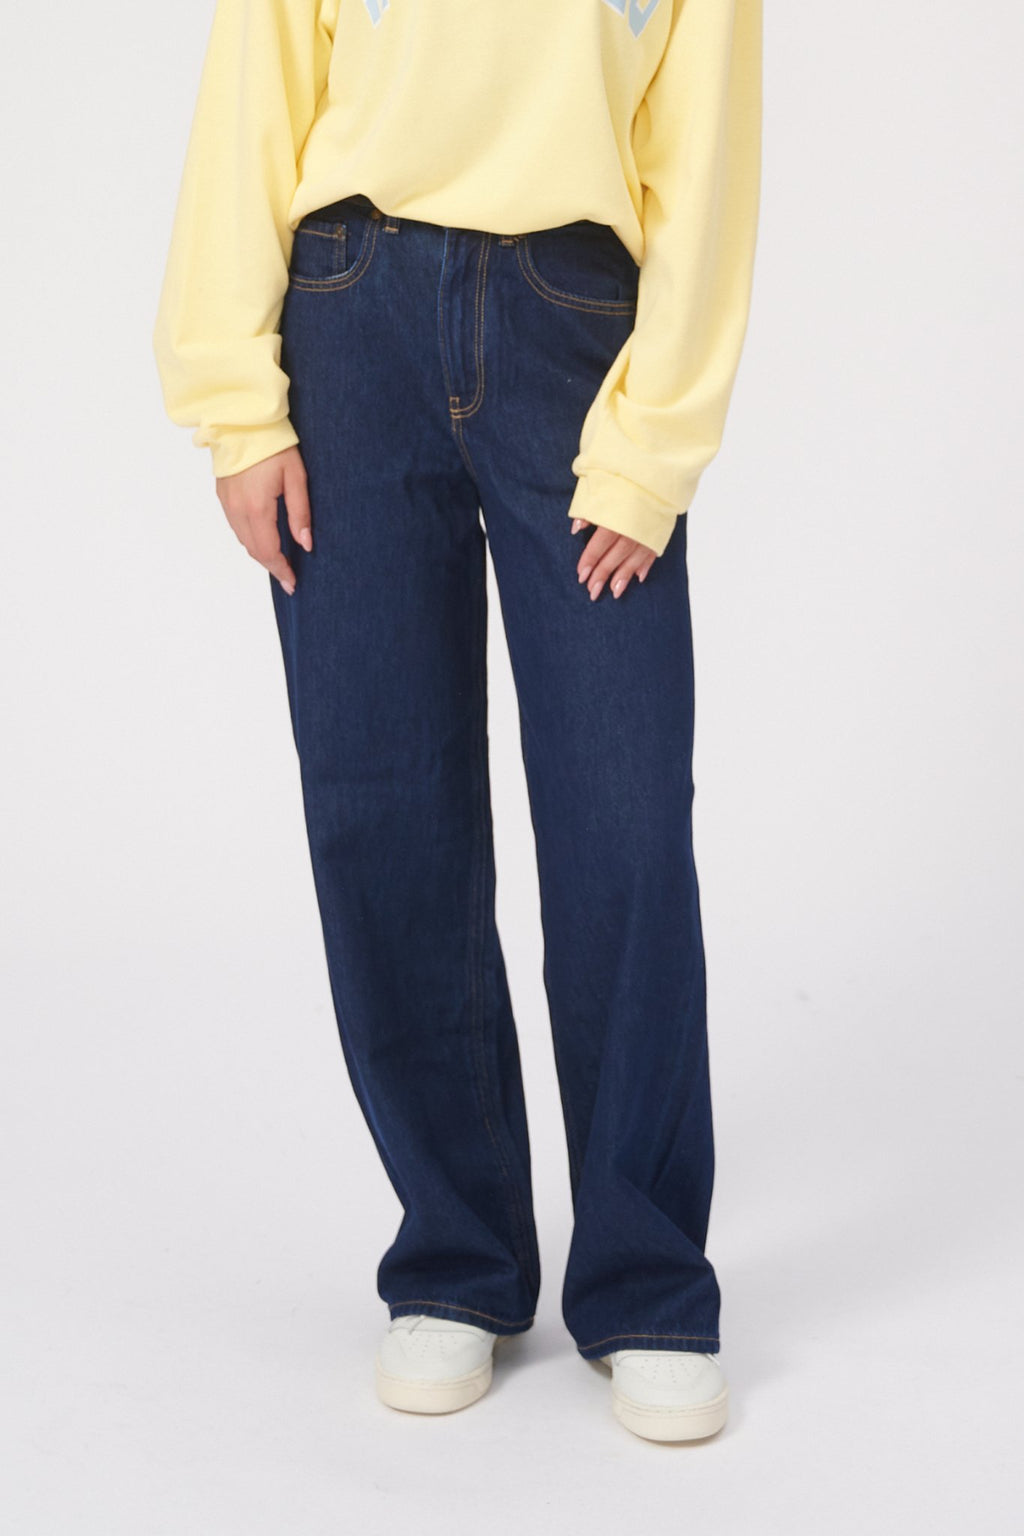 The Original Performance Brede jeans - pakketdeal (3 pcs.)